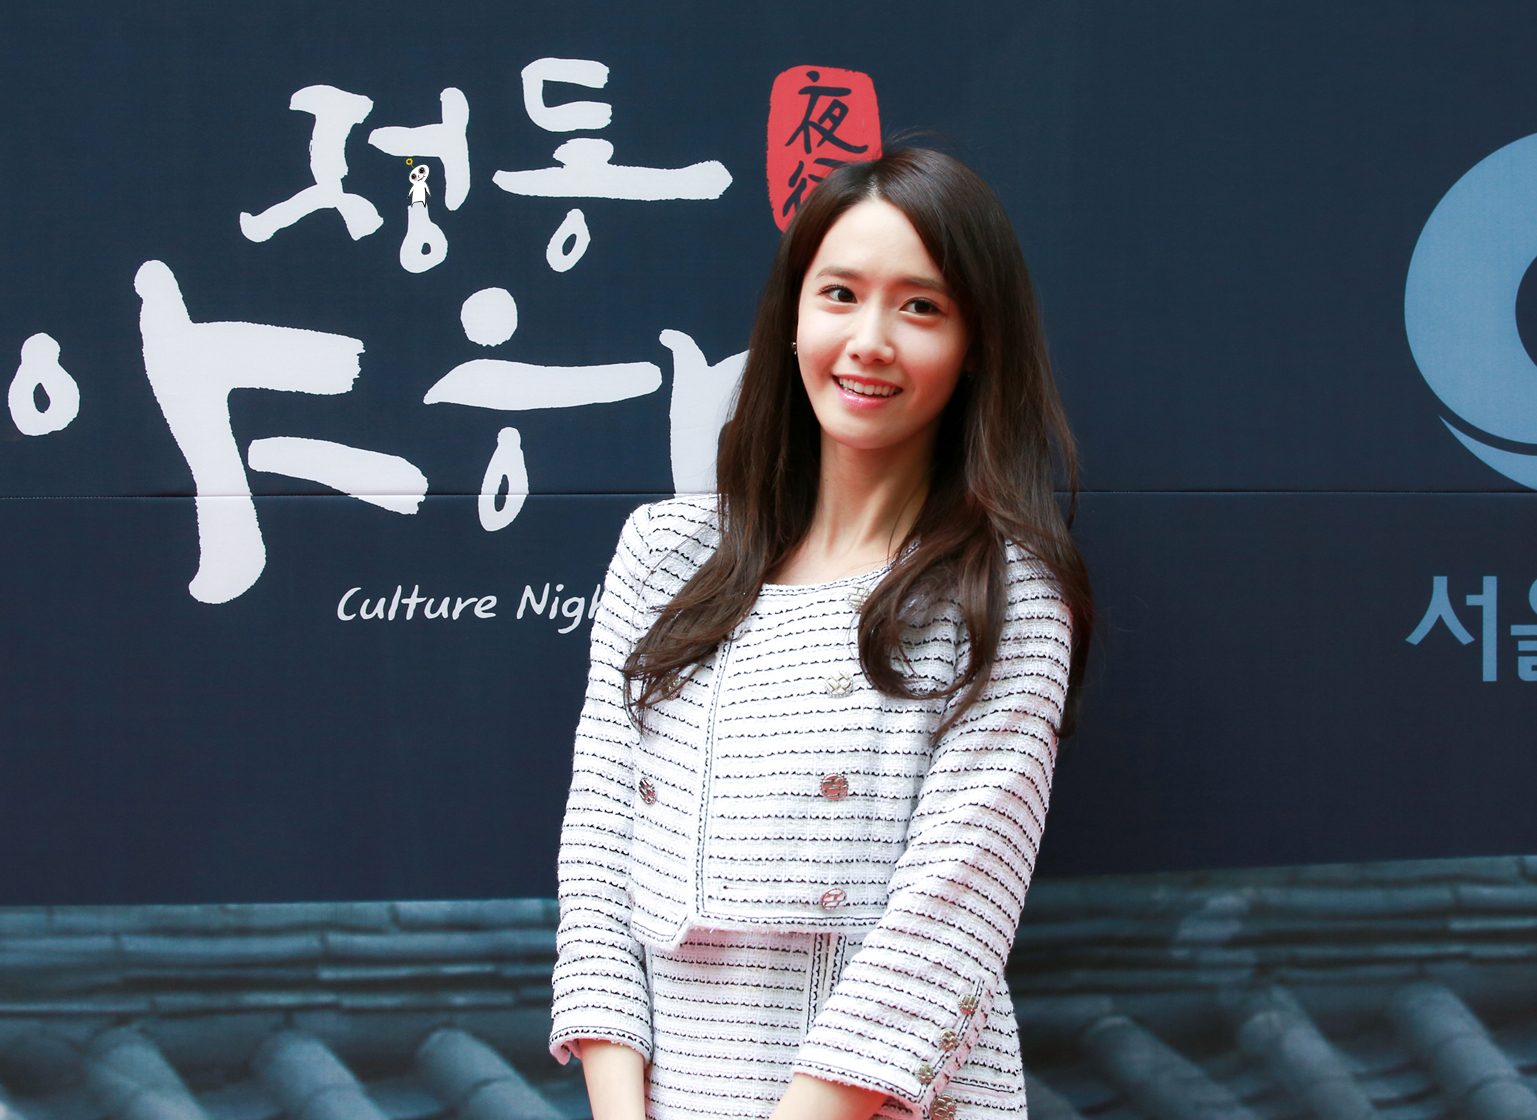 [PIC][29-05-2015]YoonA tham dự "Jung-gu Culture Night Festival" tại Deoksugung vào chiều nay - Page 3 2567E250556AE2A0136B09